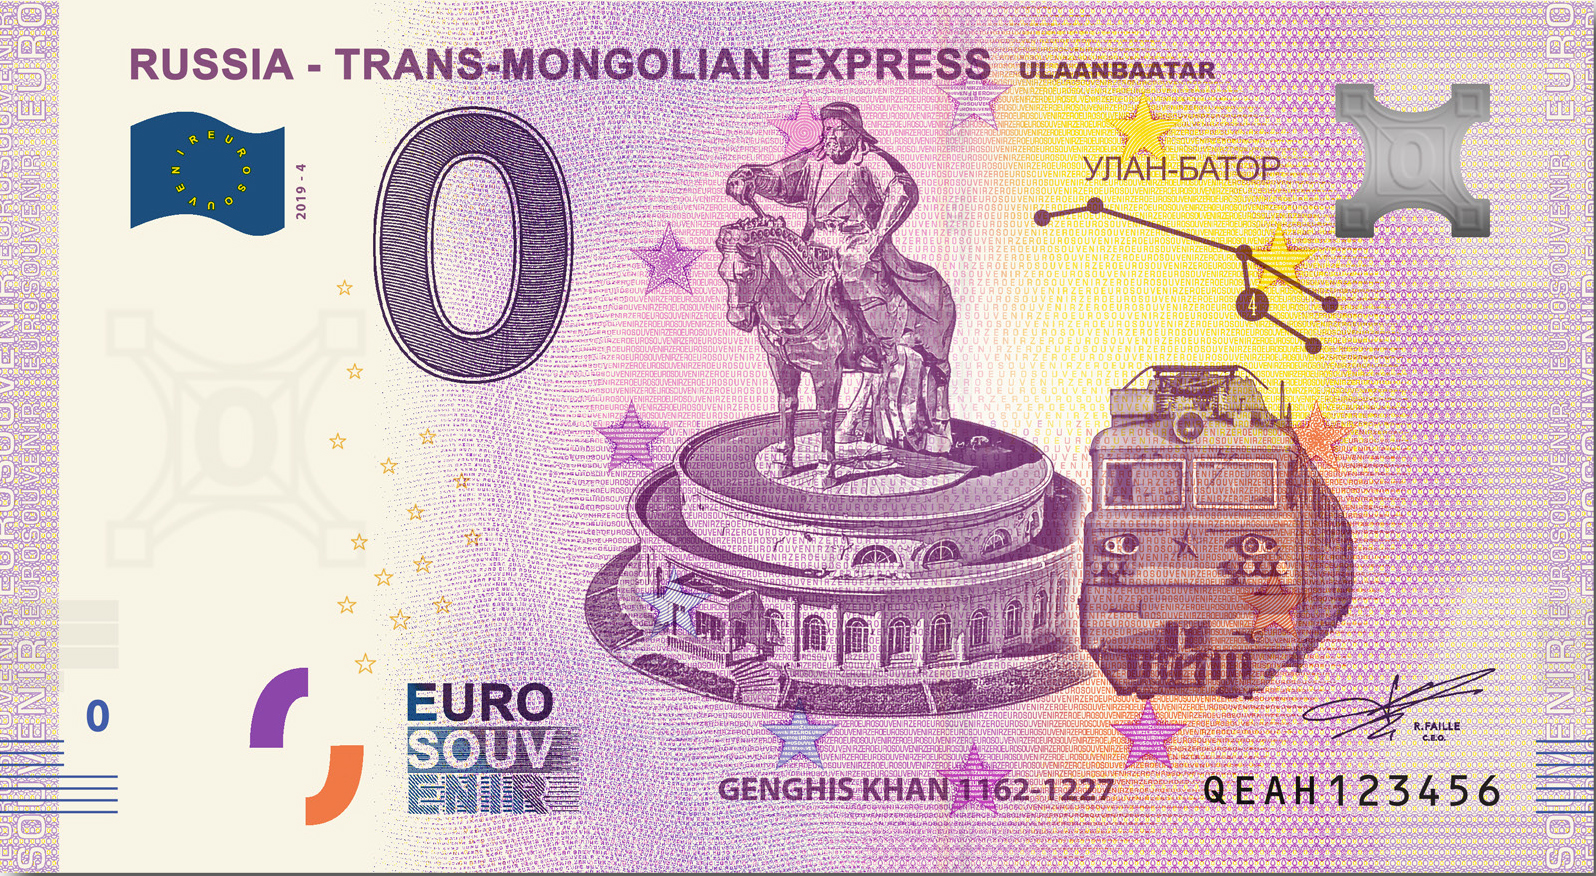 0 Euro souvenir note Rusland 2019 - Trans-Mongolian Express Ulaanbaatar